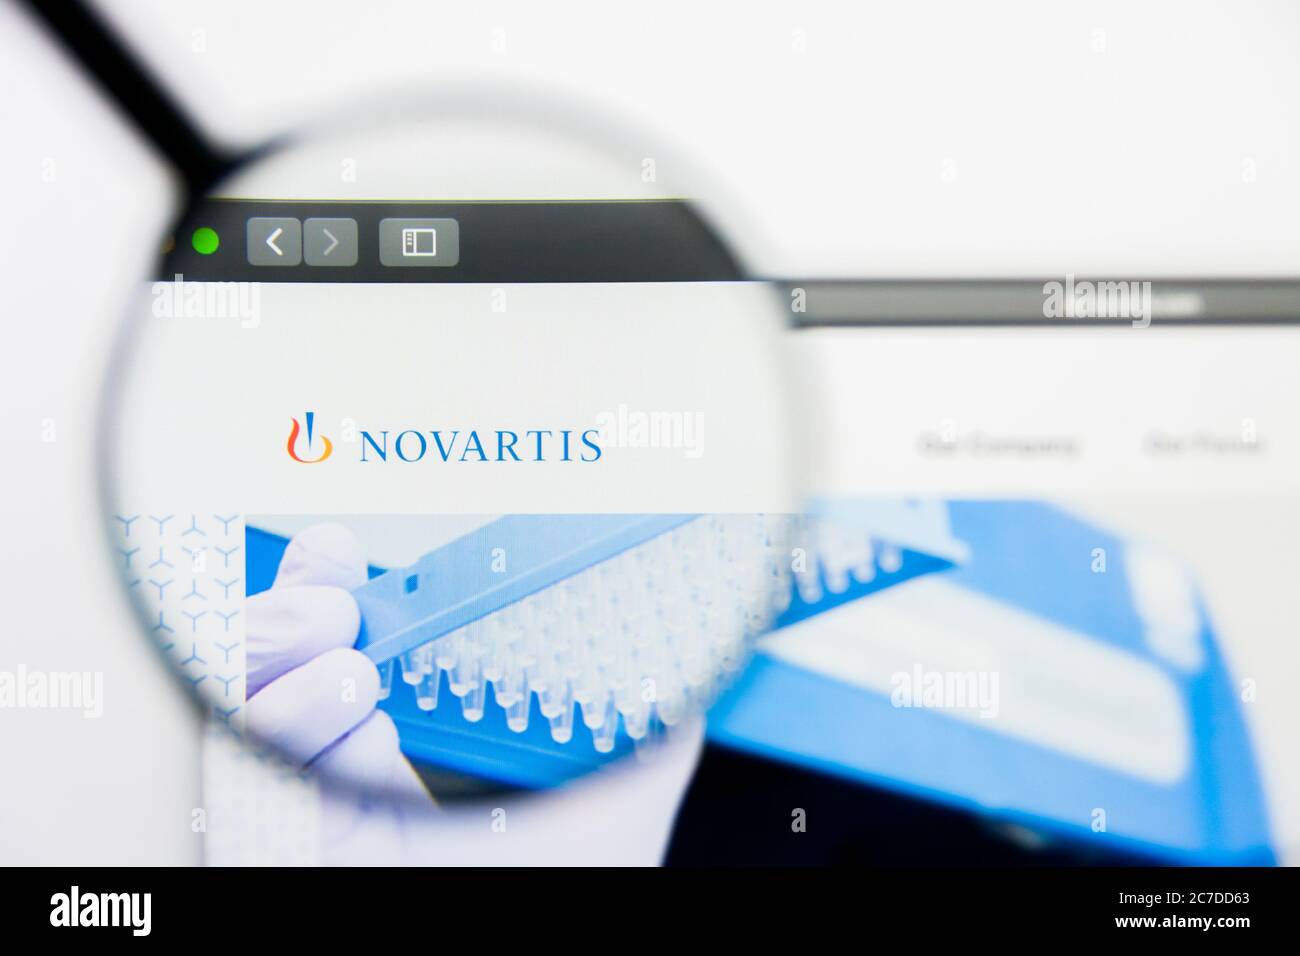 Los Angeles, California, USA - 25 March 2019: Illustrative Editorial of Novartis website homepage. Novartis logo visible on display screen. Stock Photo